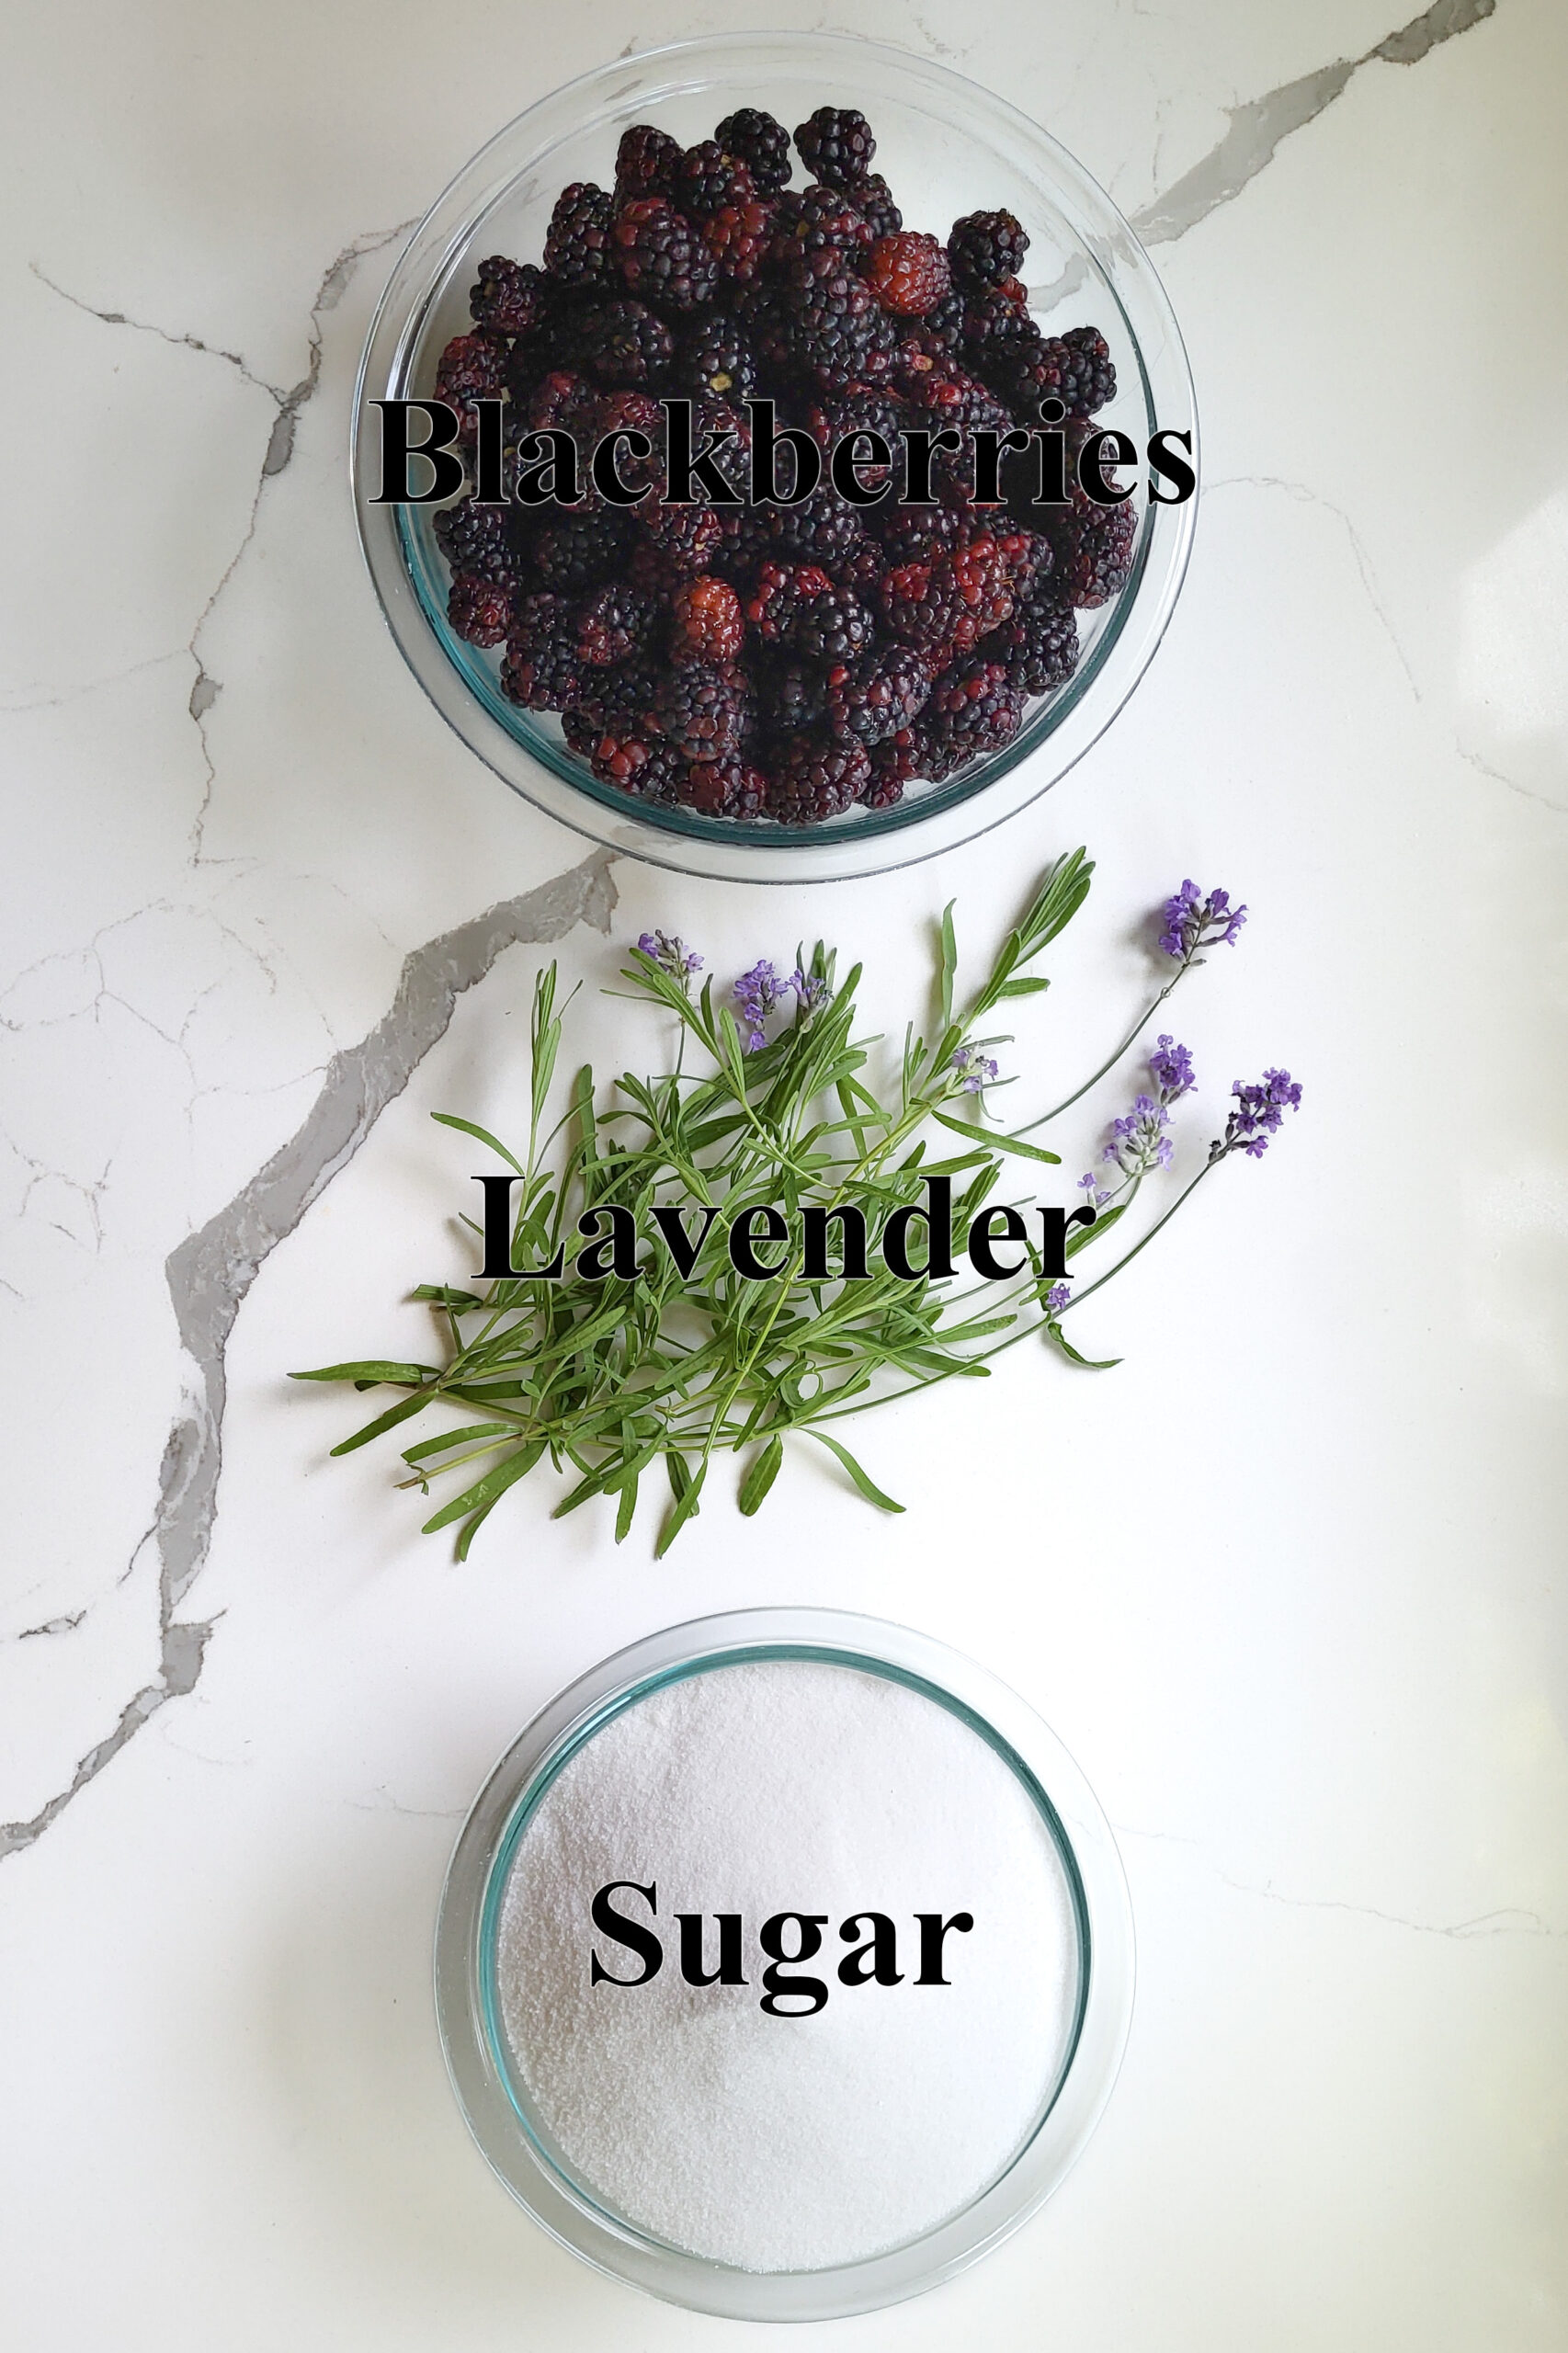 ingredients for blackberry lavender preserves in glass bowls.